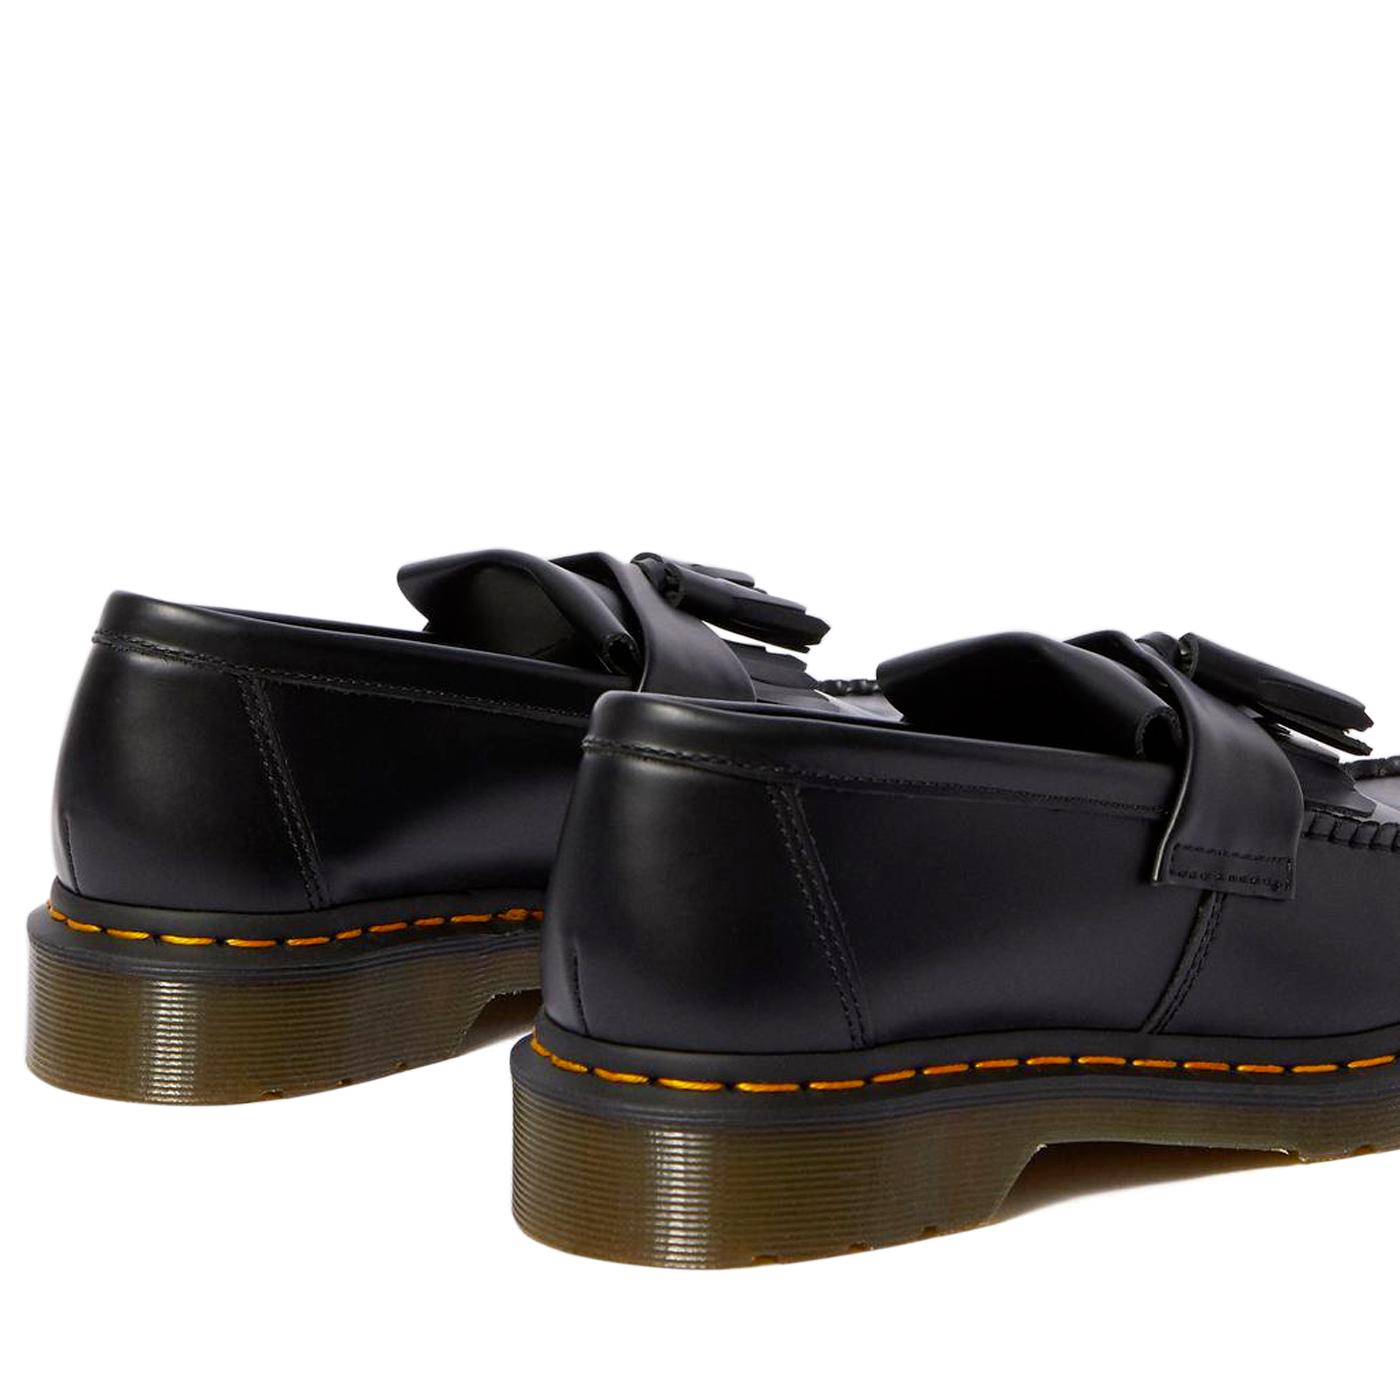 DR MARTENS Adrian Women's Retro Leather Tassel Loafers B